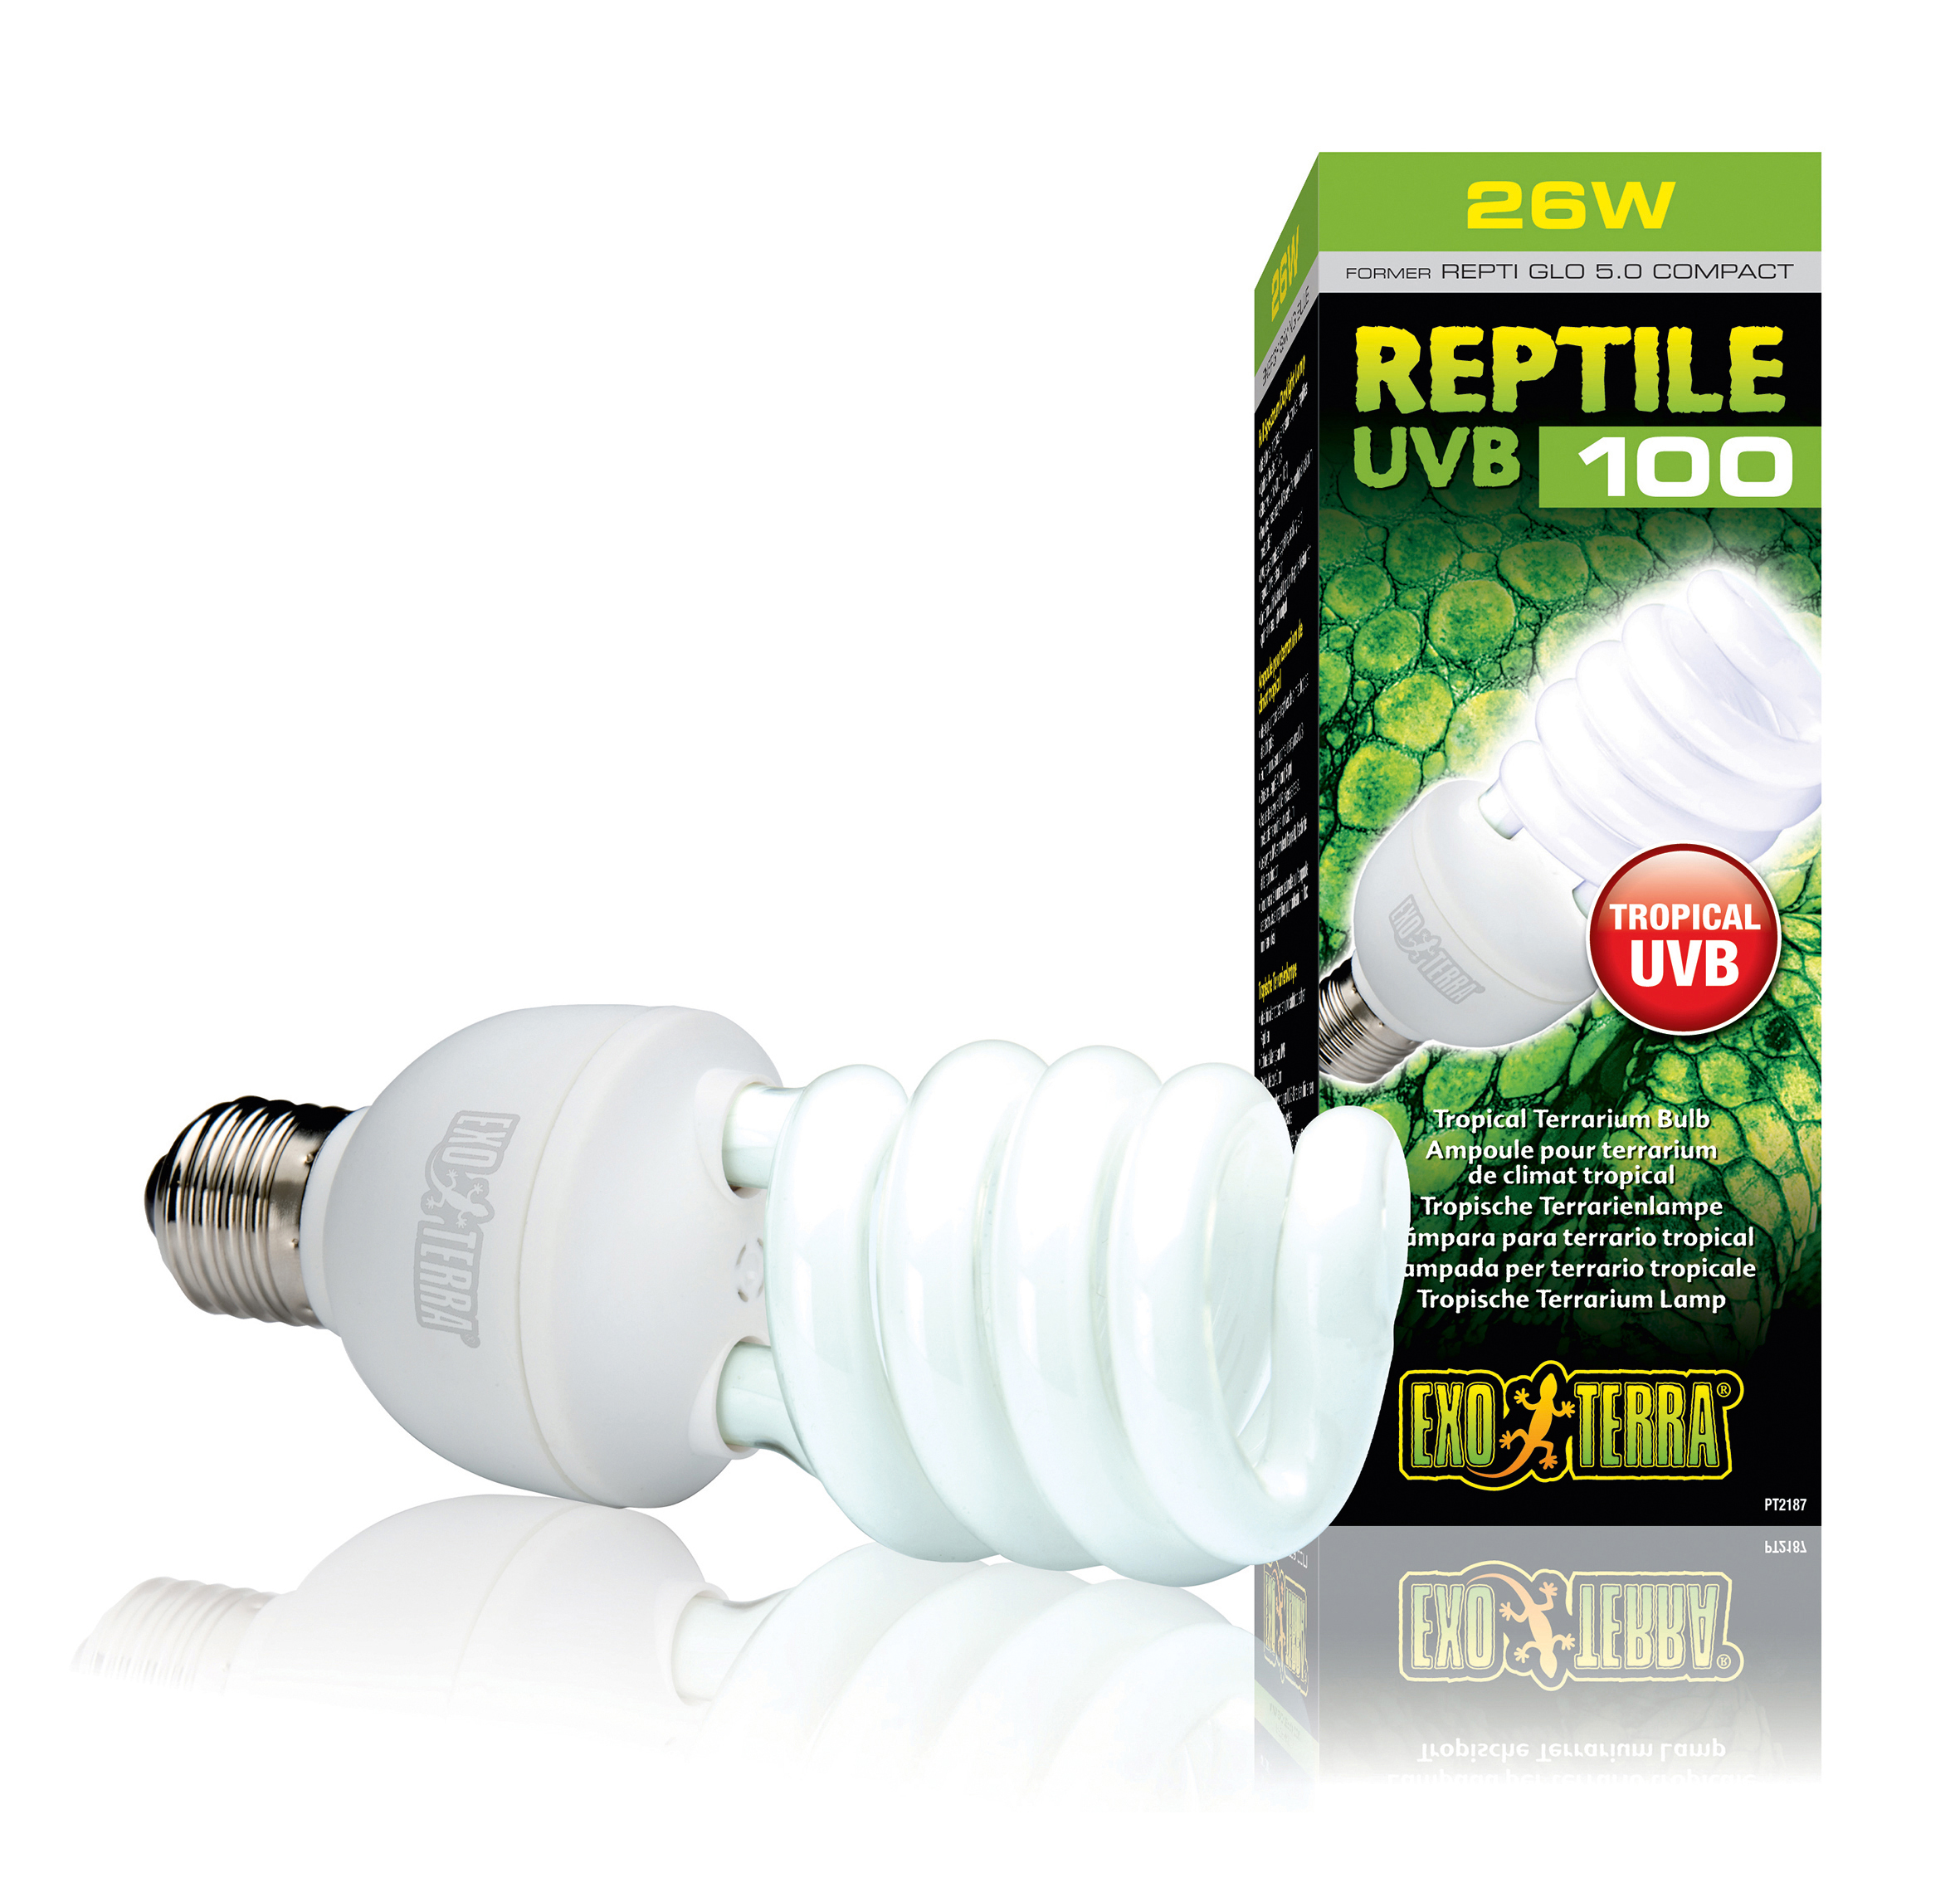 Ex reptile uvb100 tropenlamp - <Product shot>